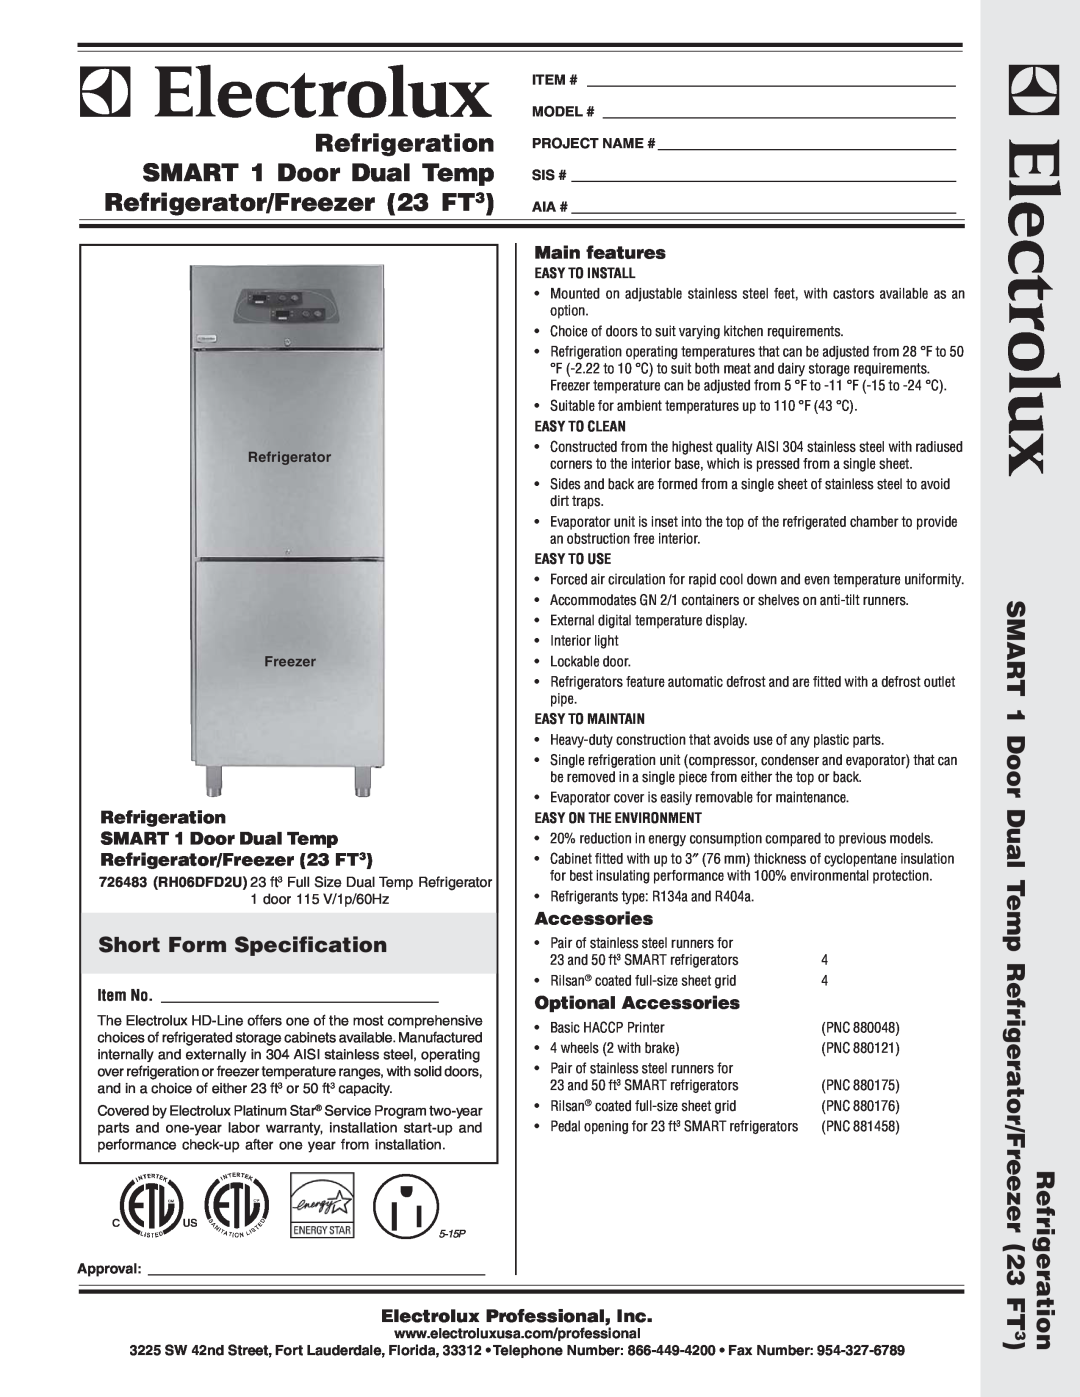 Electrolux RH06DFD2U warranty Short Form Specification, Refrigeration SMART 1 Door Dual Temp Refrigerator/Freezer 23 FT3 